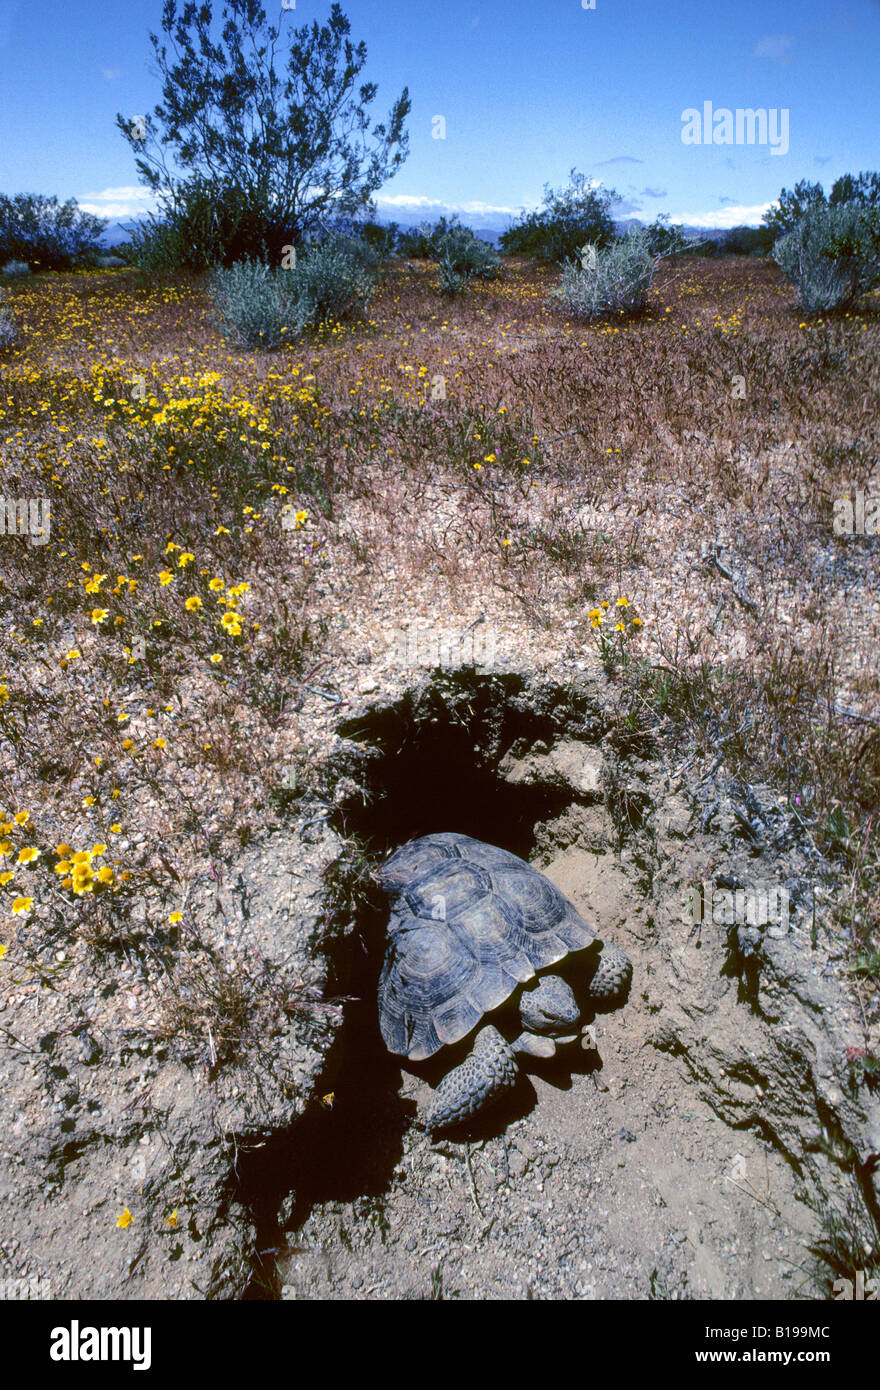 Adult desert tortoise (Gopherus agassizii) foraging in the Mojave Desert, southern California, USA Stock Photo